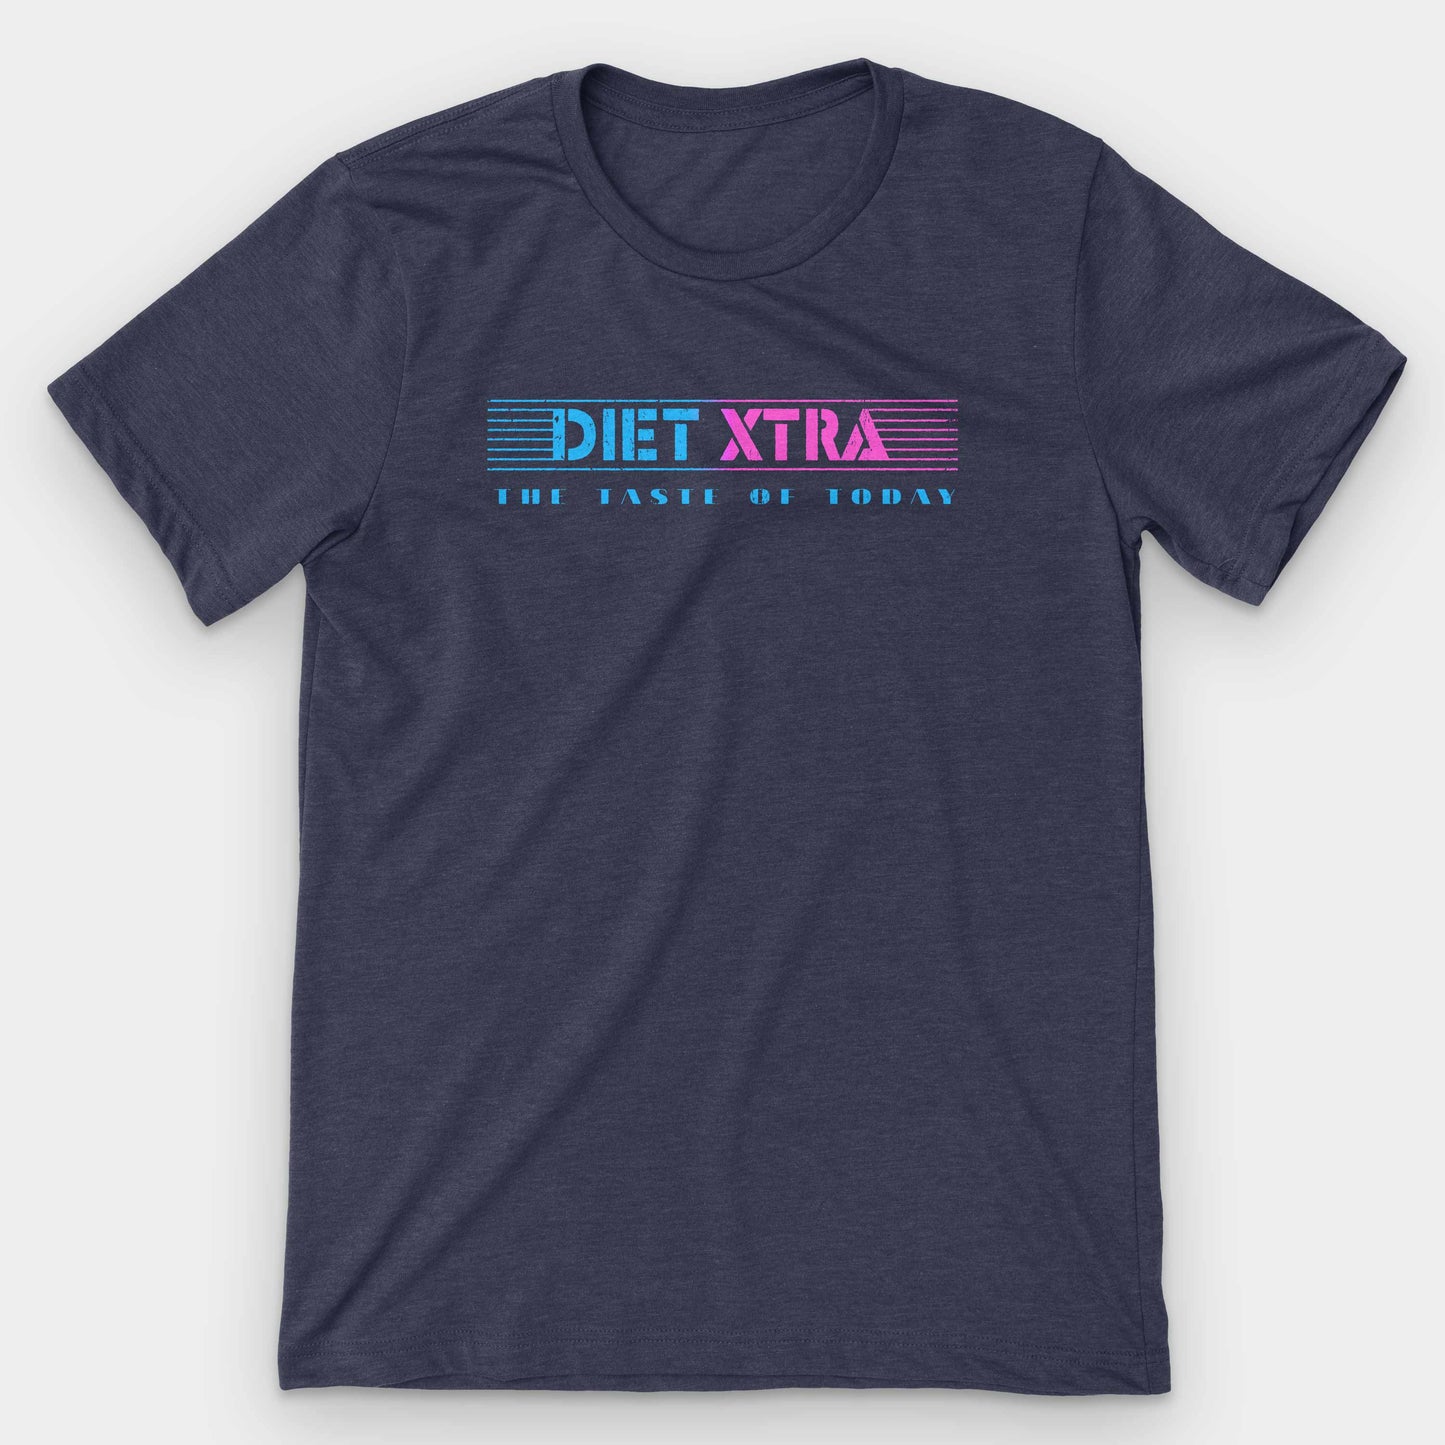 Heather Midnight Navy Diet Xtra Soda Graphic T-Shirt by Snaxtime